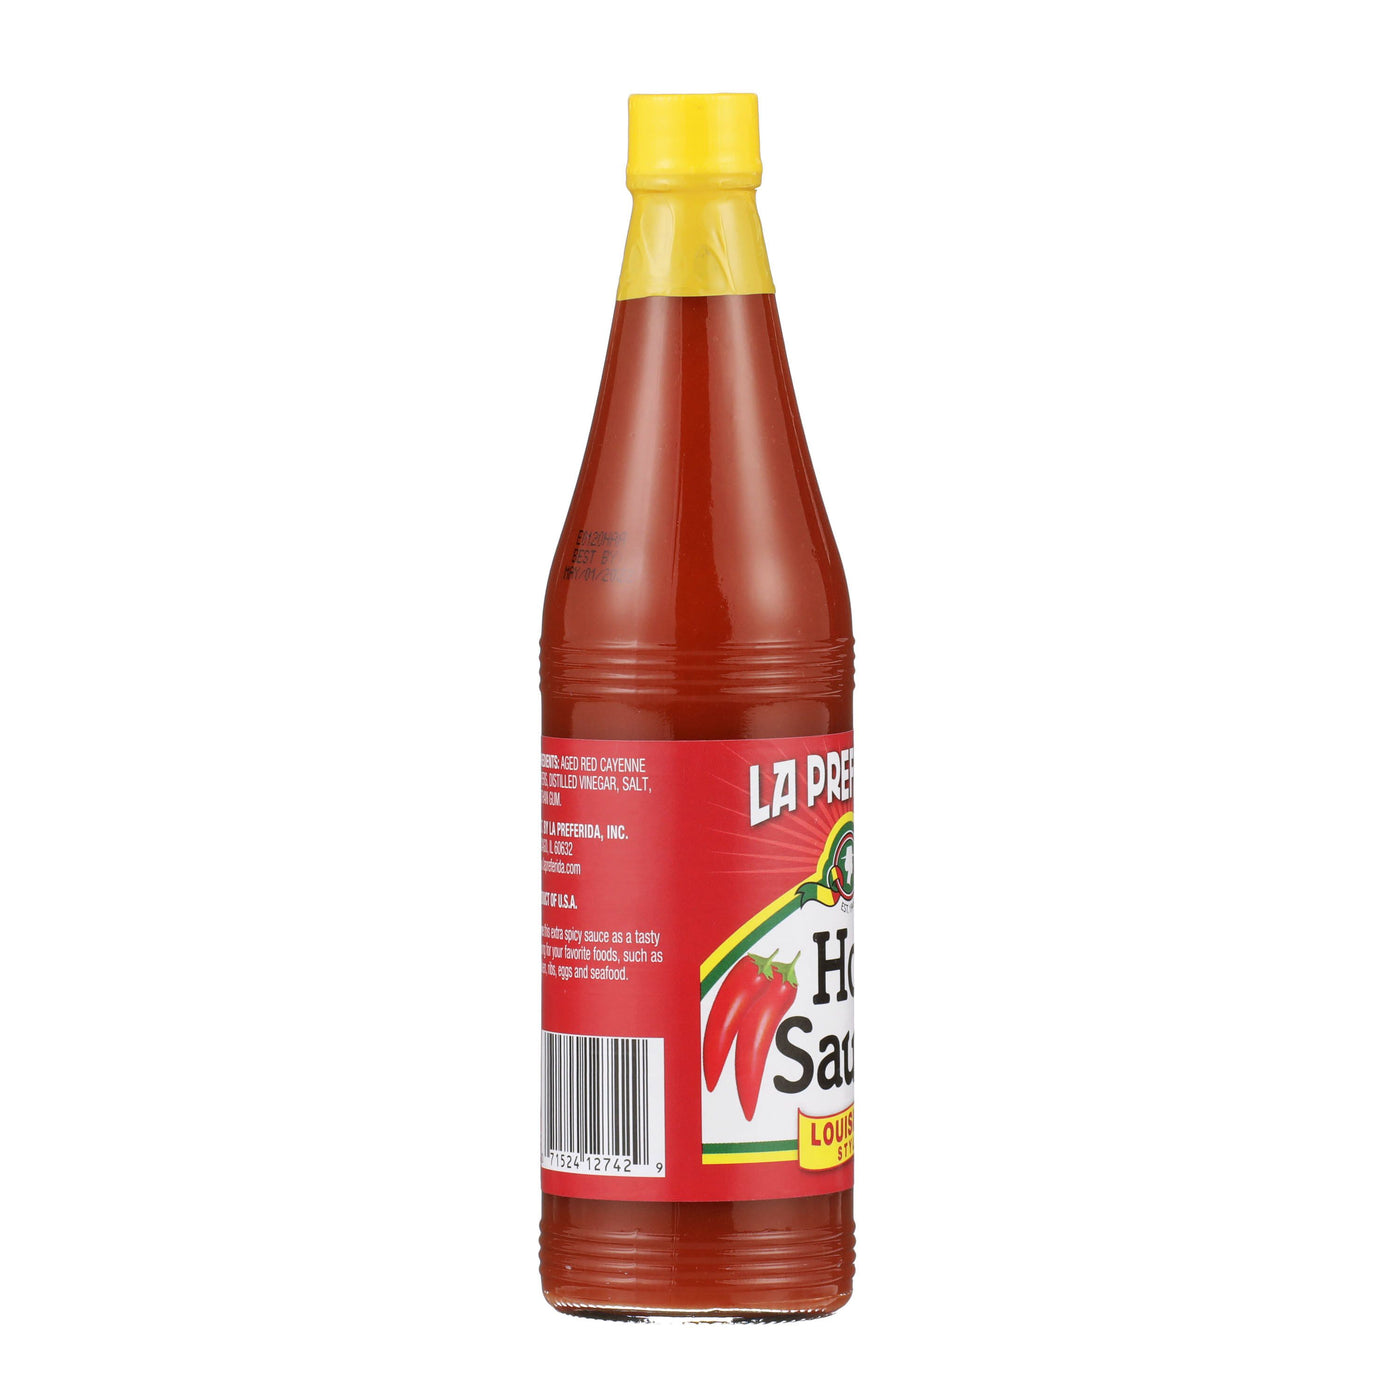 Louisiana Brand Southwest Jalapeno 6 oz – Louisiana Hot Sauce